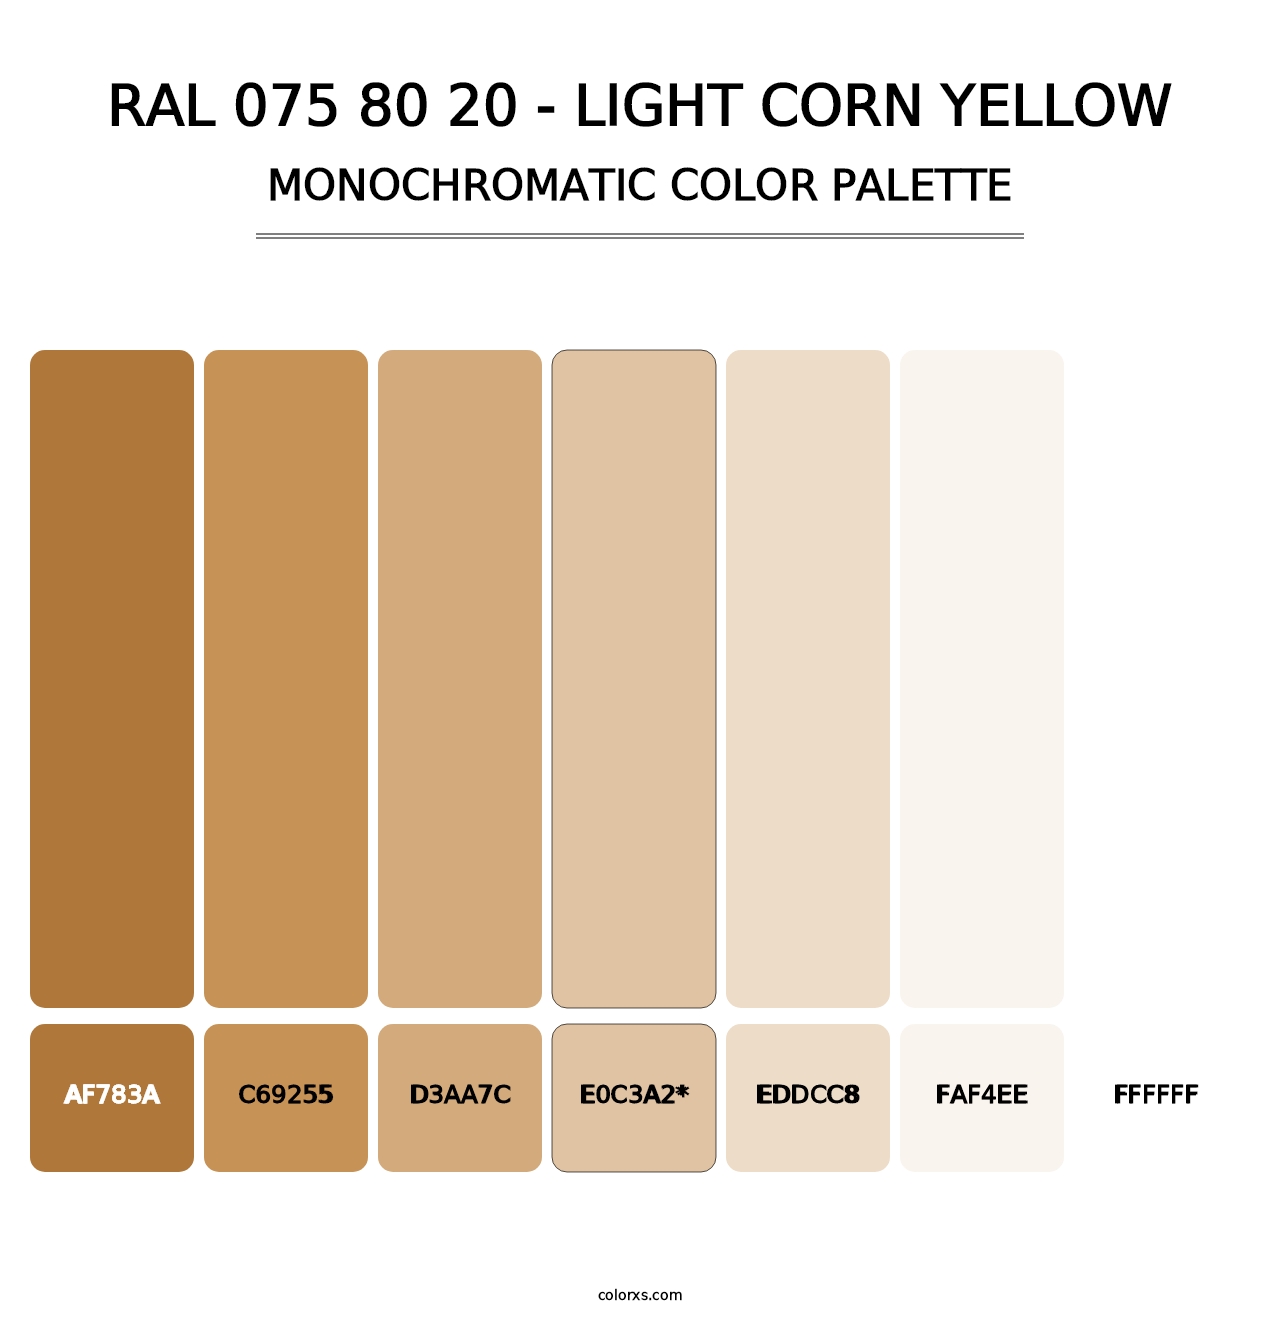 RAL 075 80 20 - Light Corn Yellow - Monochromatic Color Palette